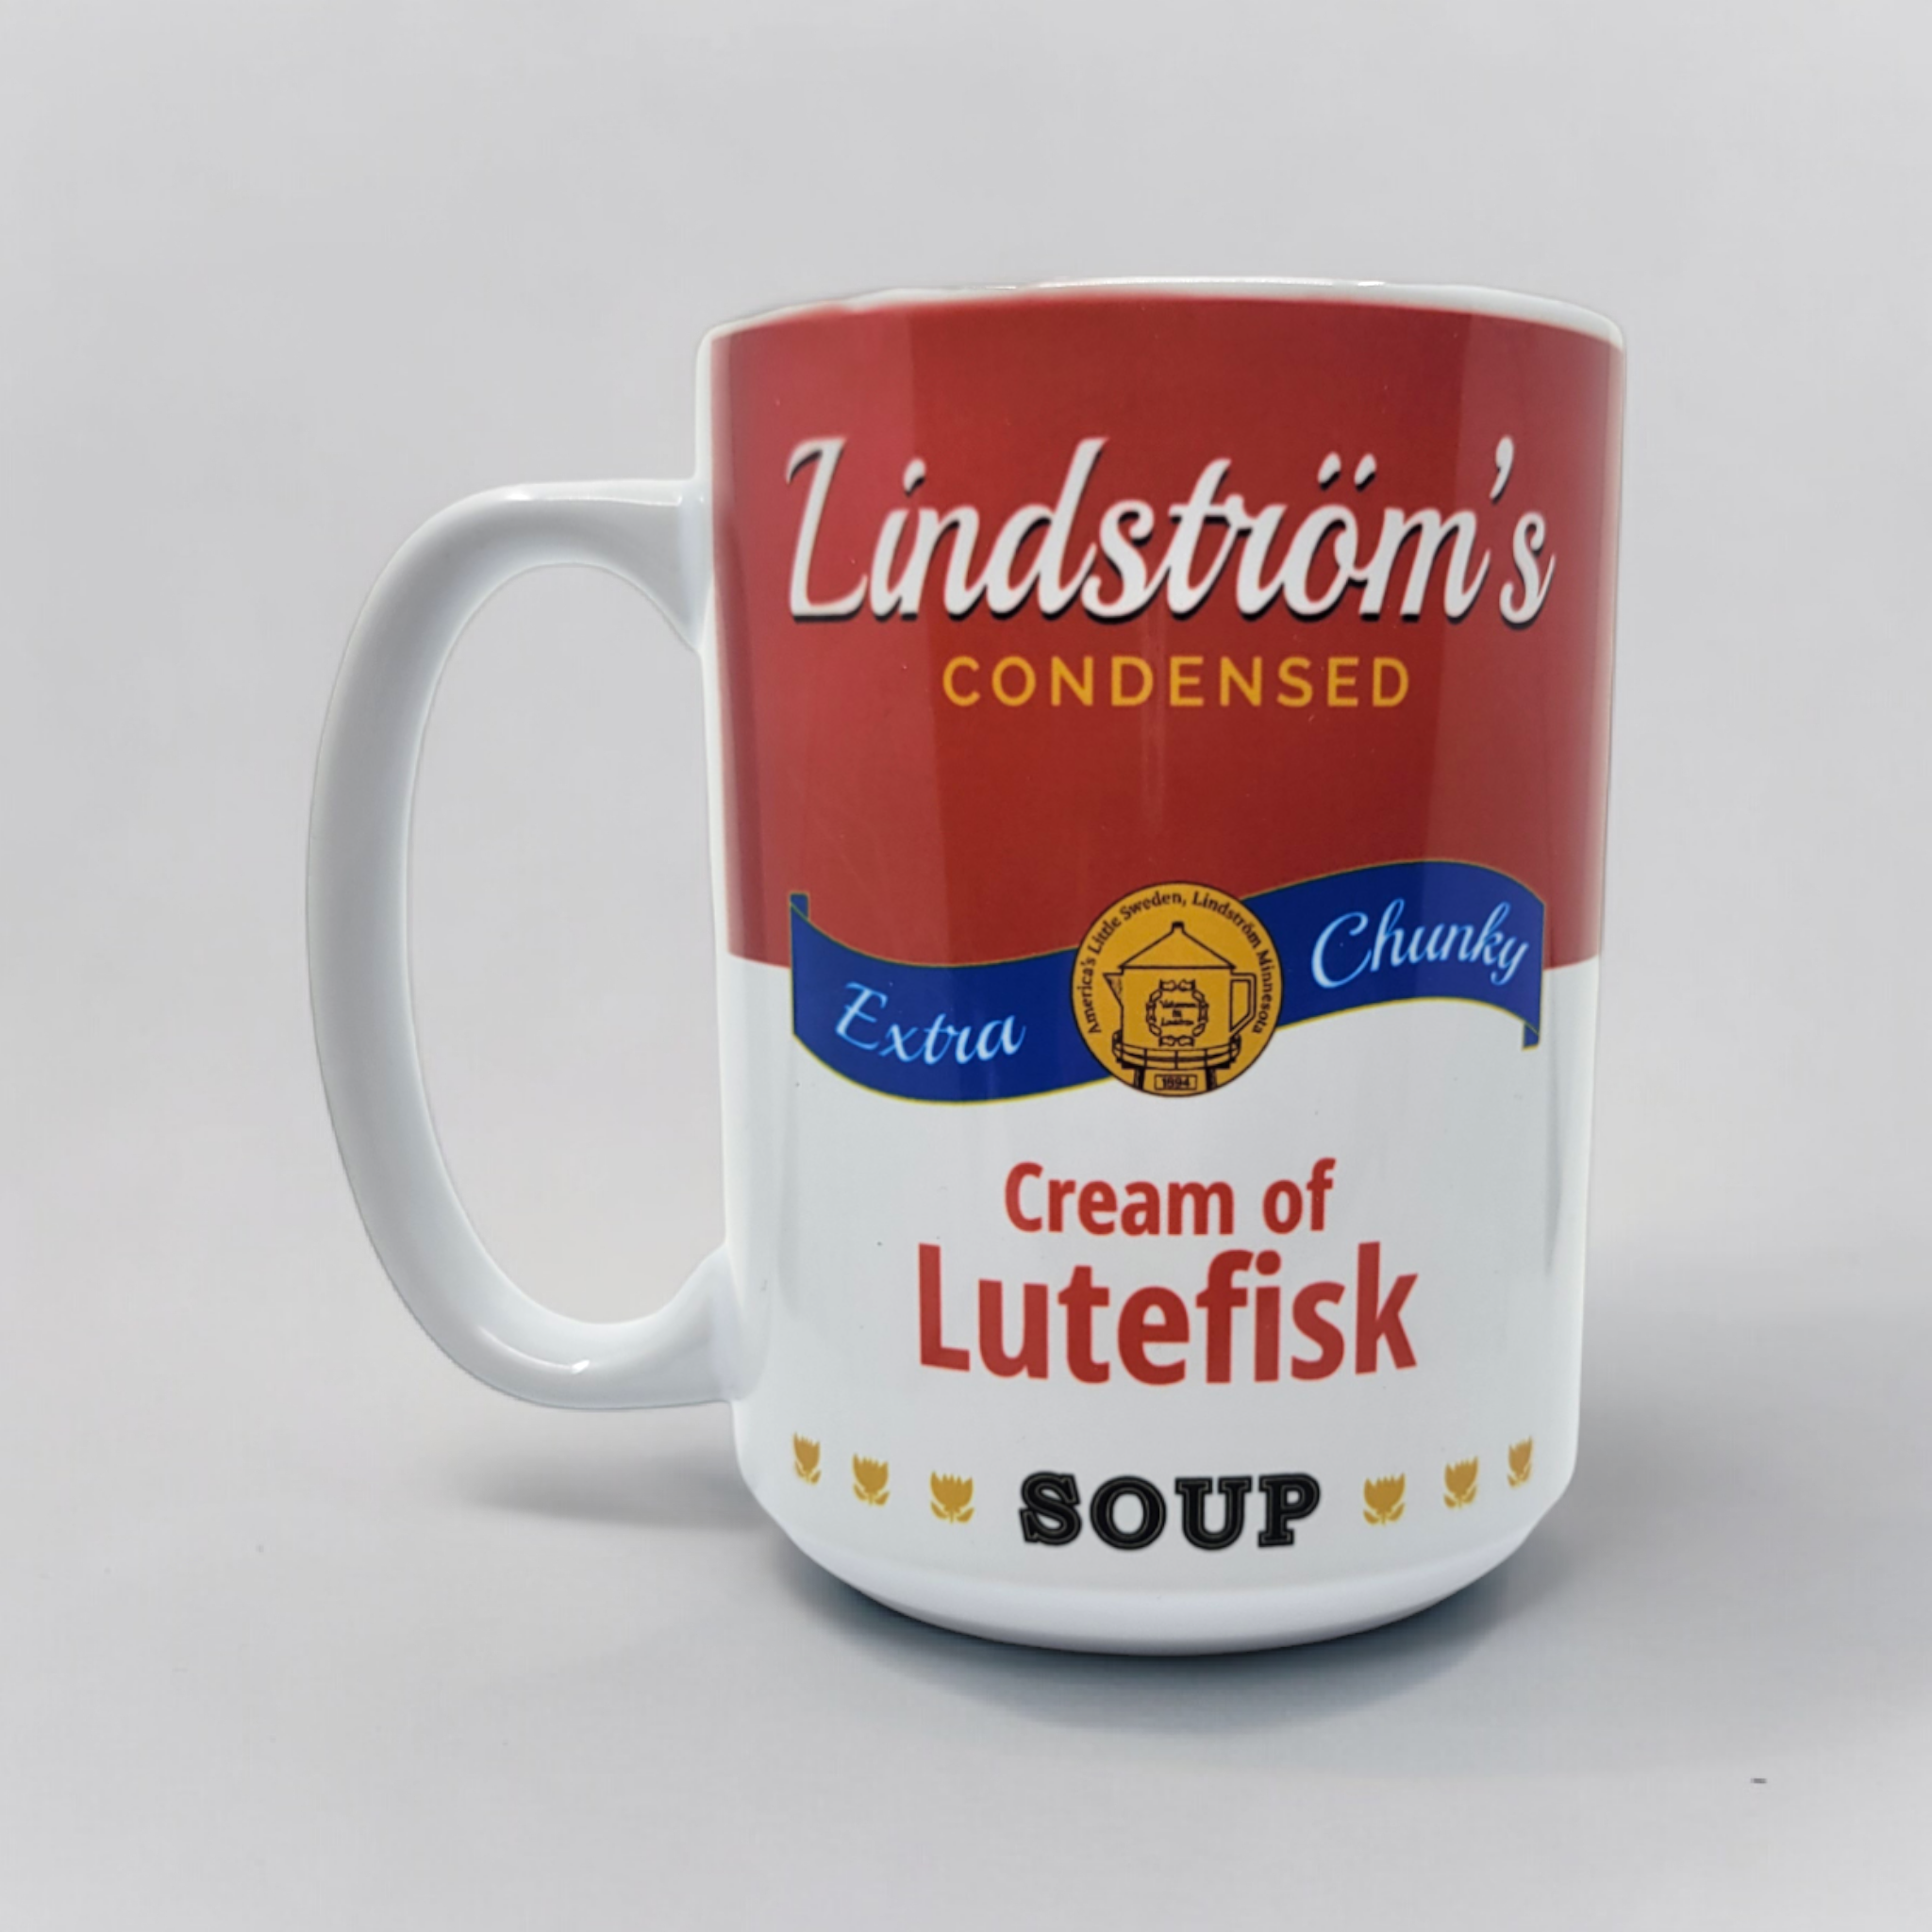 Mug: "Lindstrom's Cream of Lutefisk Soup" (15oz)